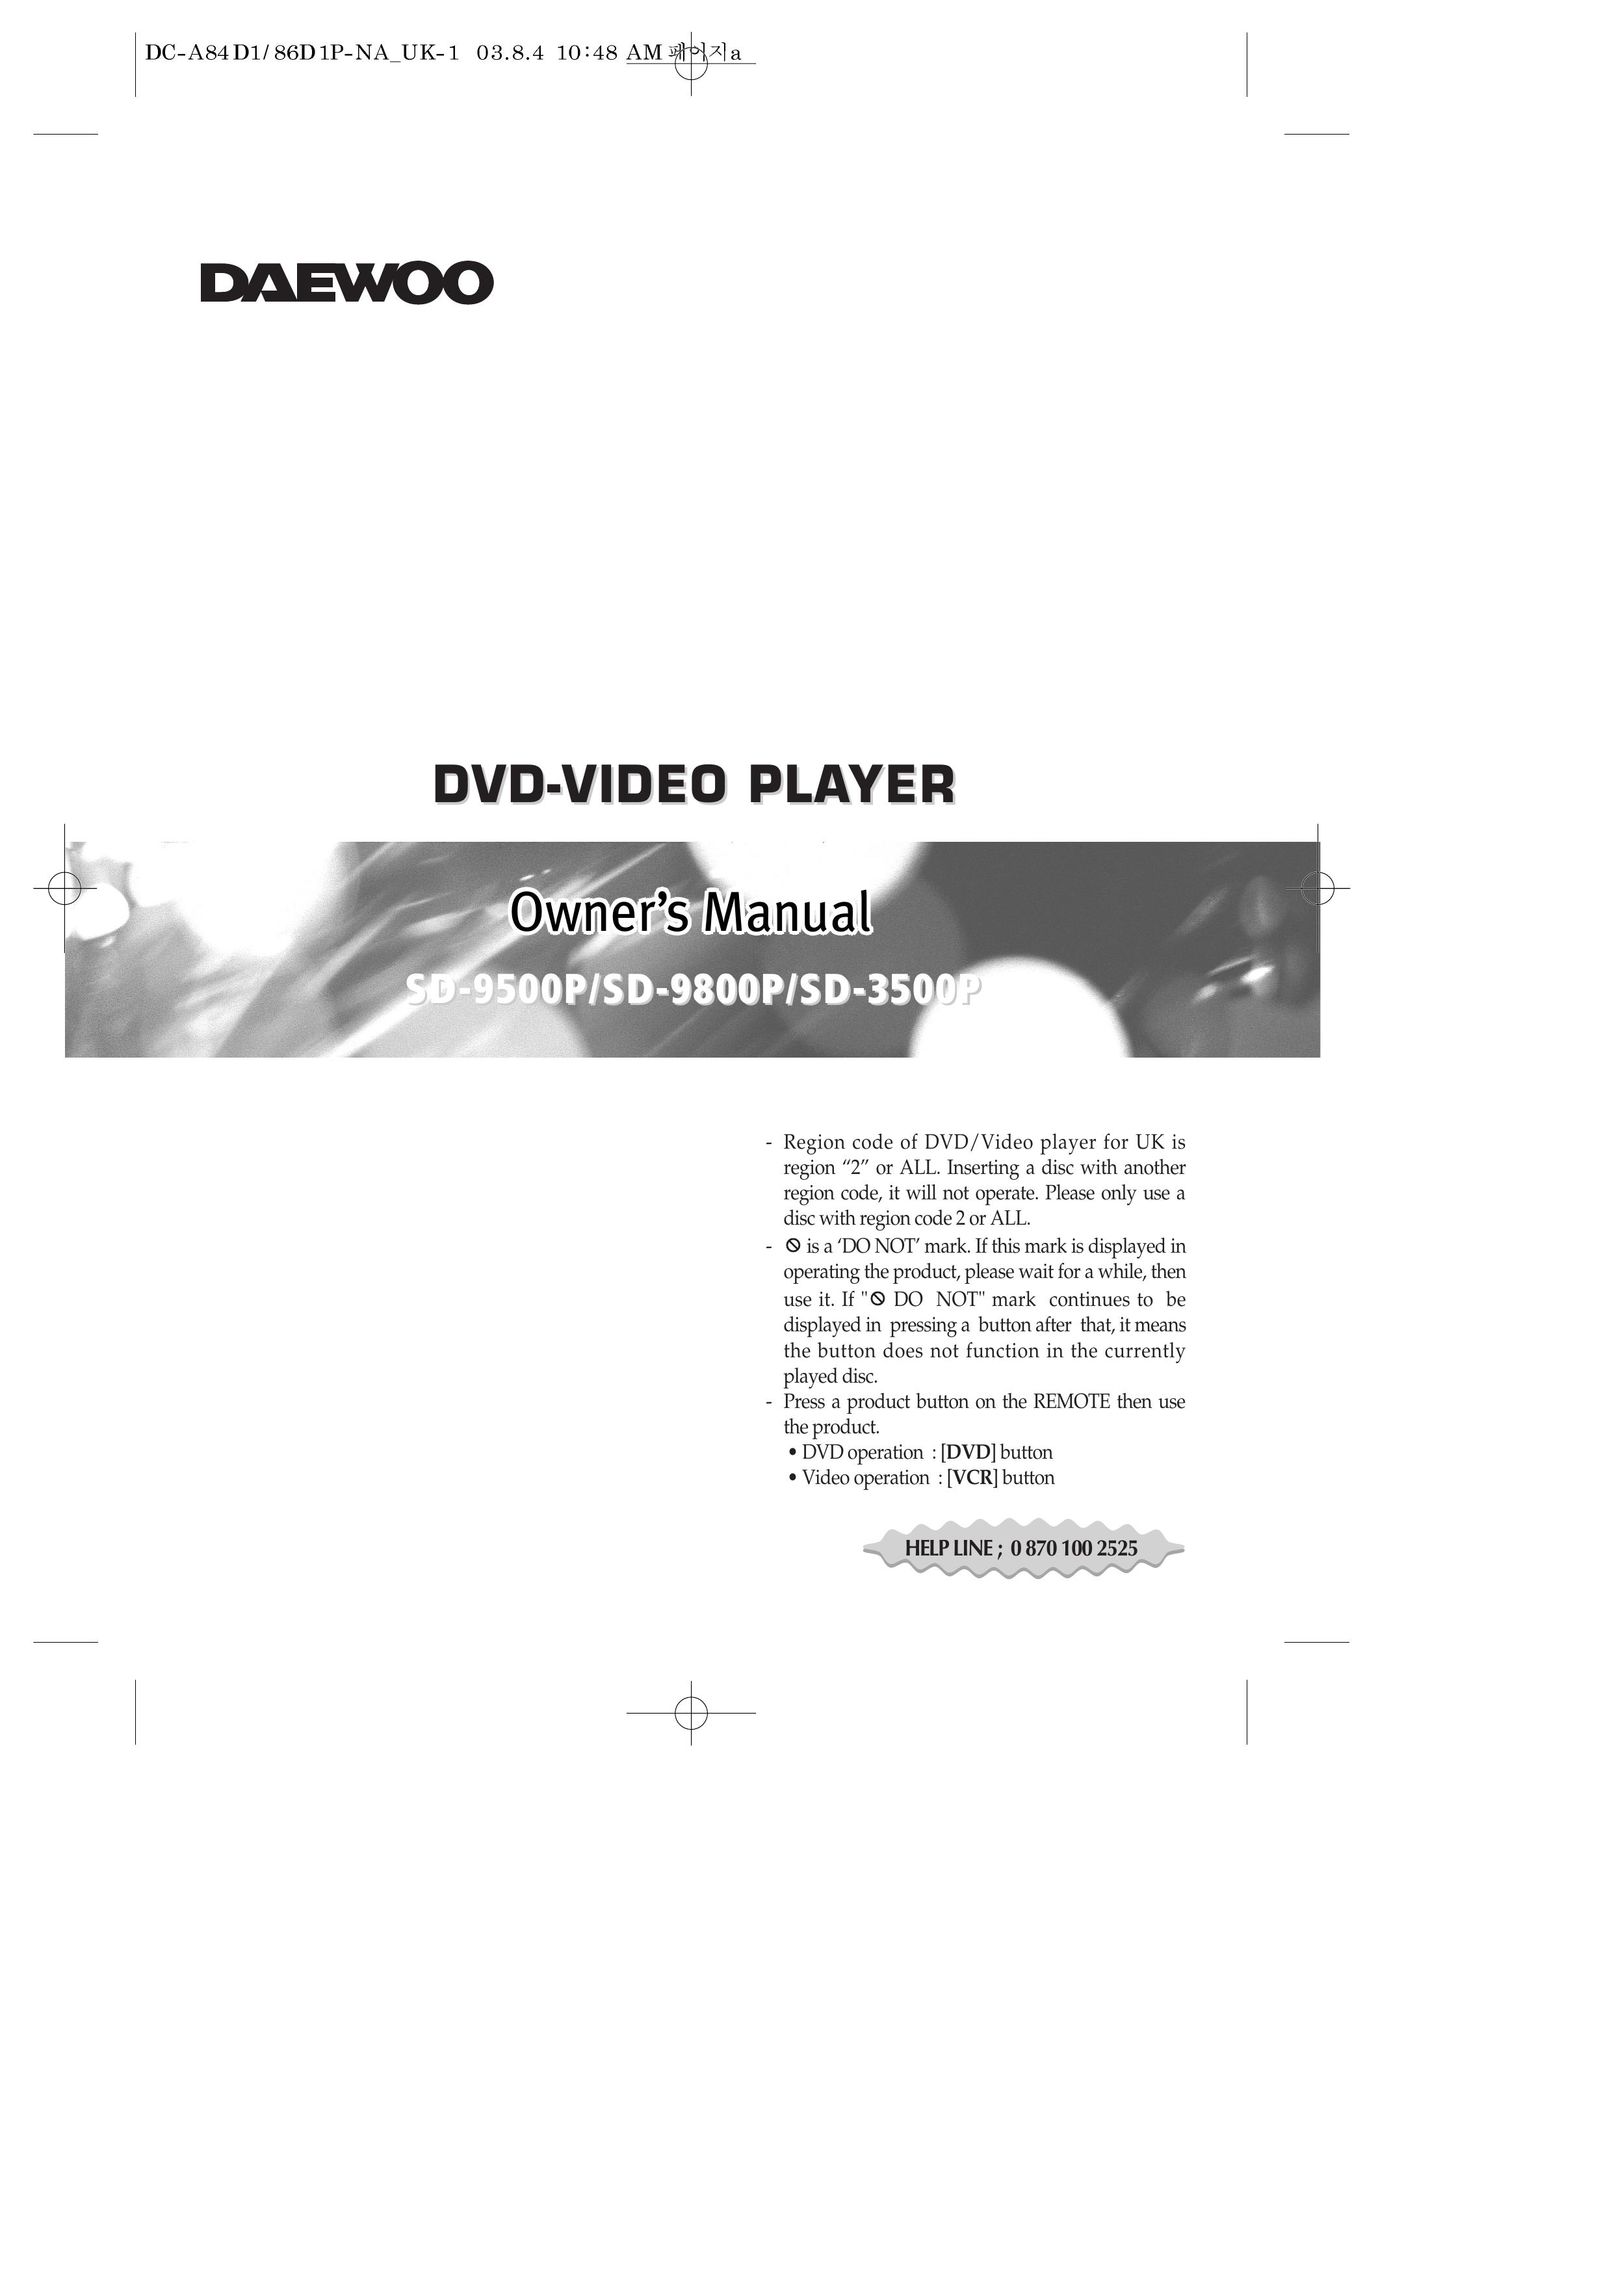 Daewoo SD-3500P DVD Player User Manual